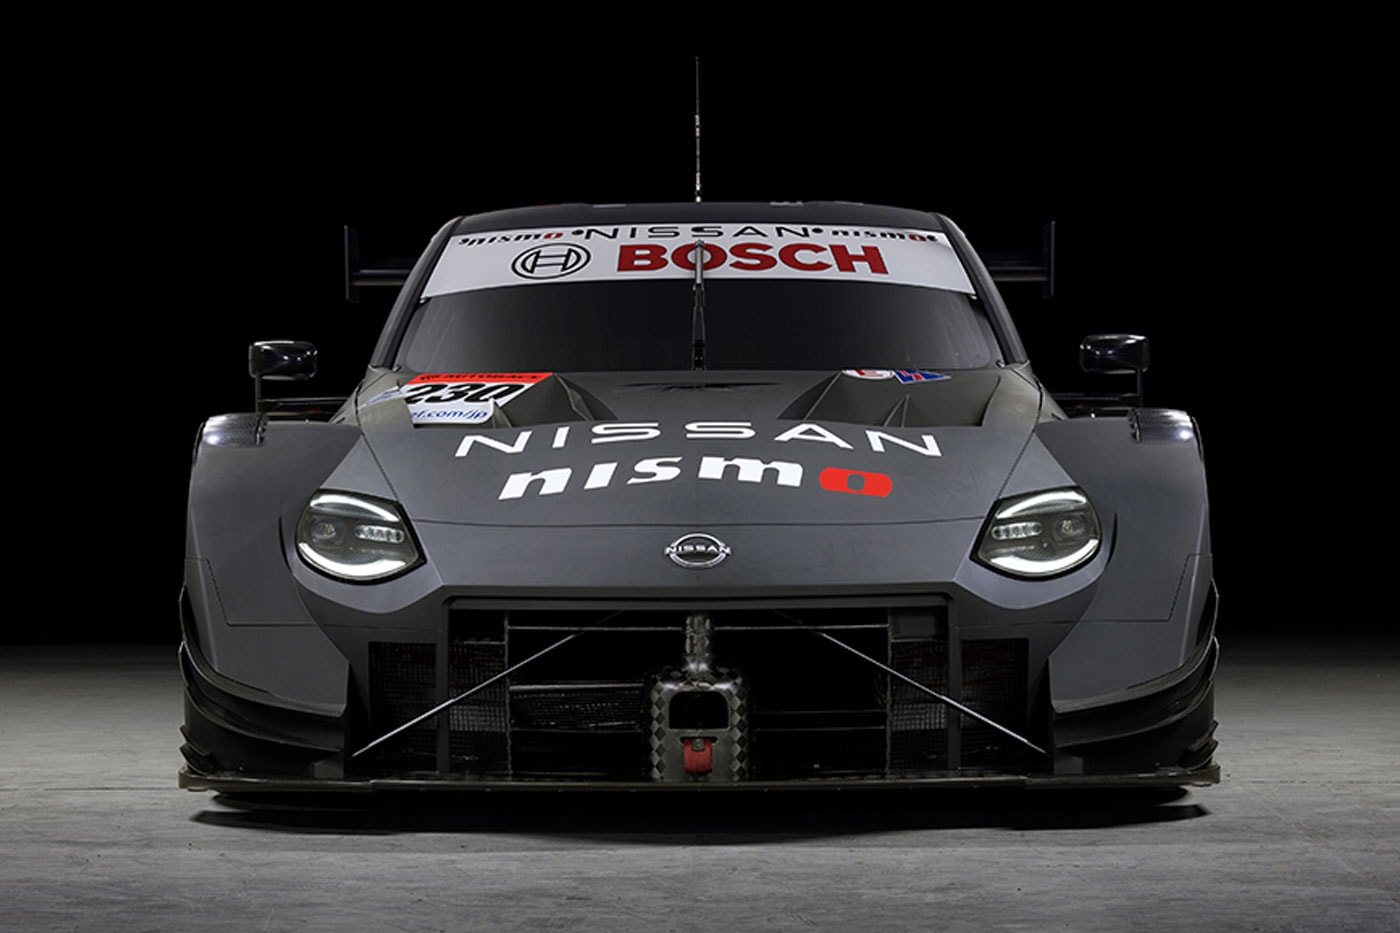 nissan nismo z gt 500 race car reveal super gt series 2022 japan fuji international speedway gtr fast black sportscar widebody